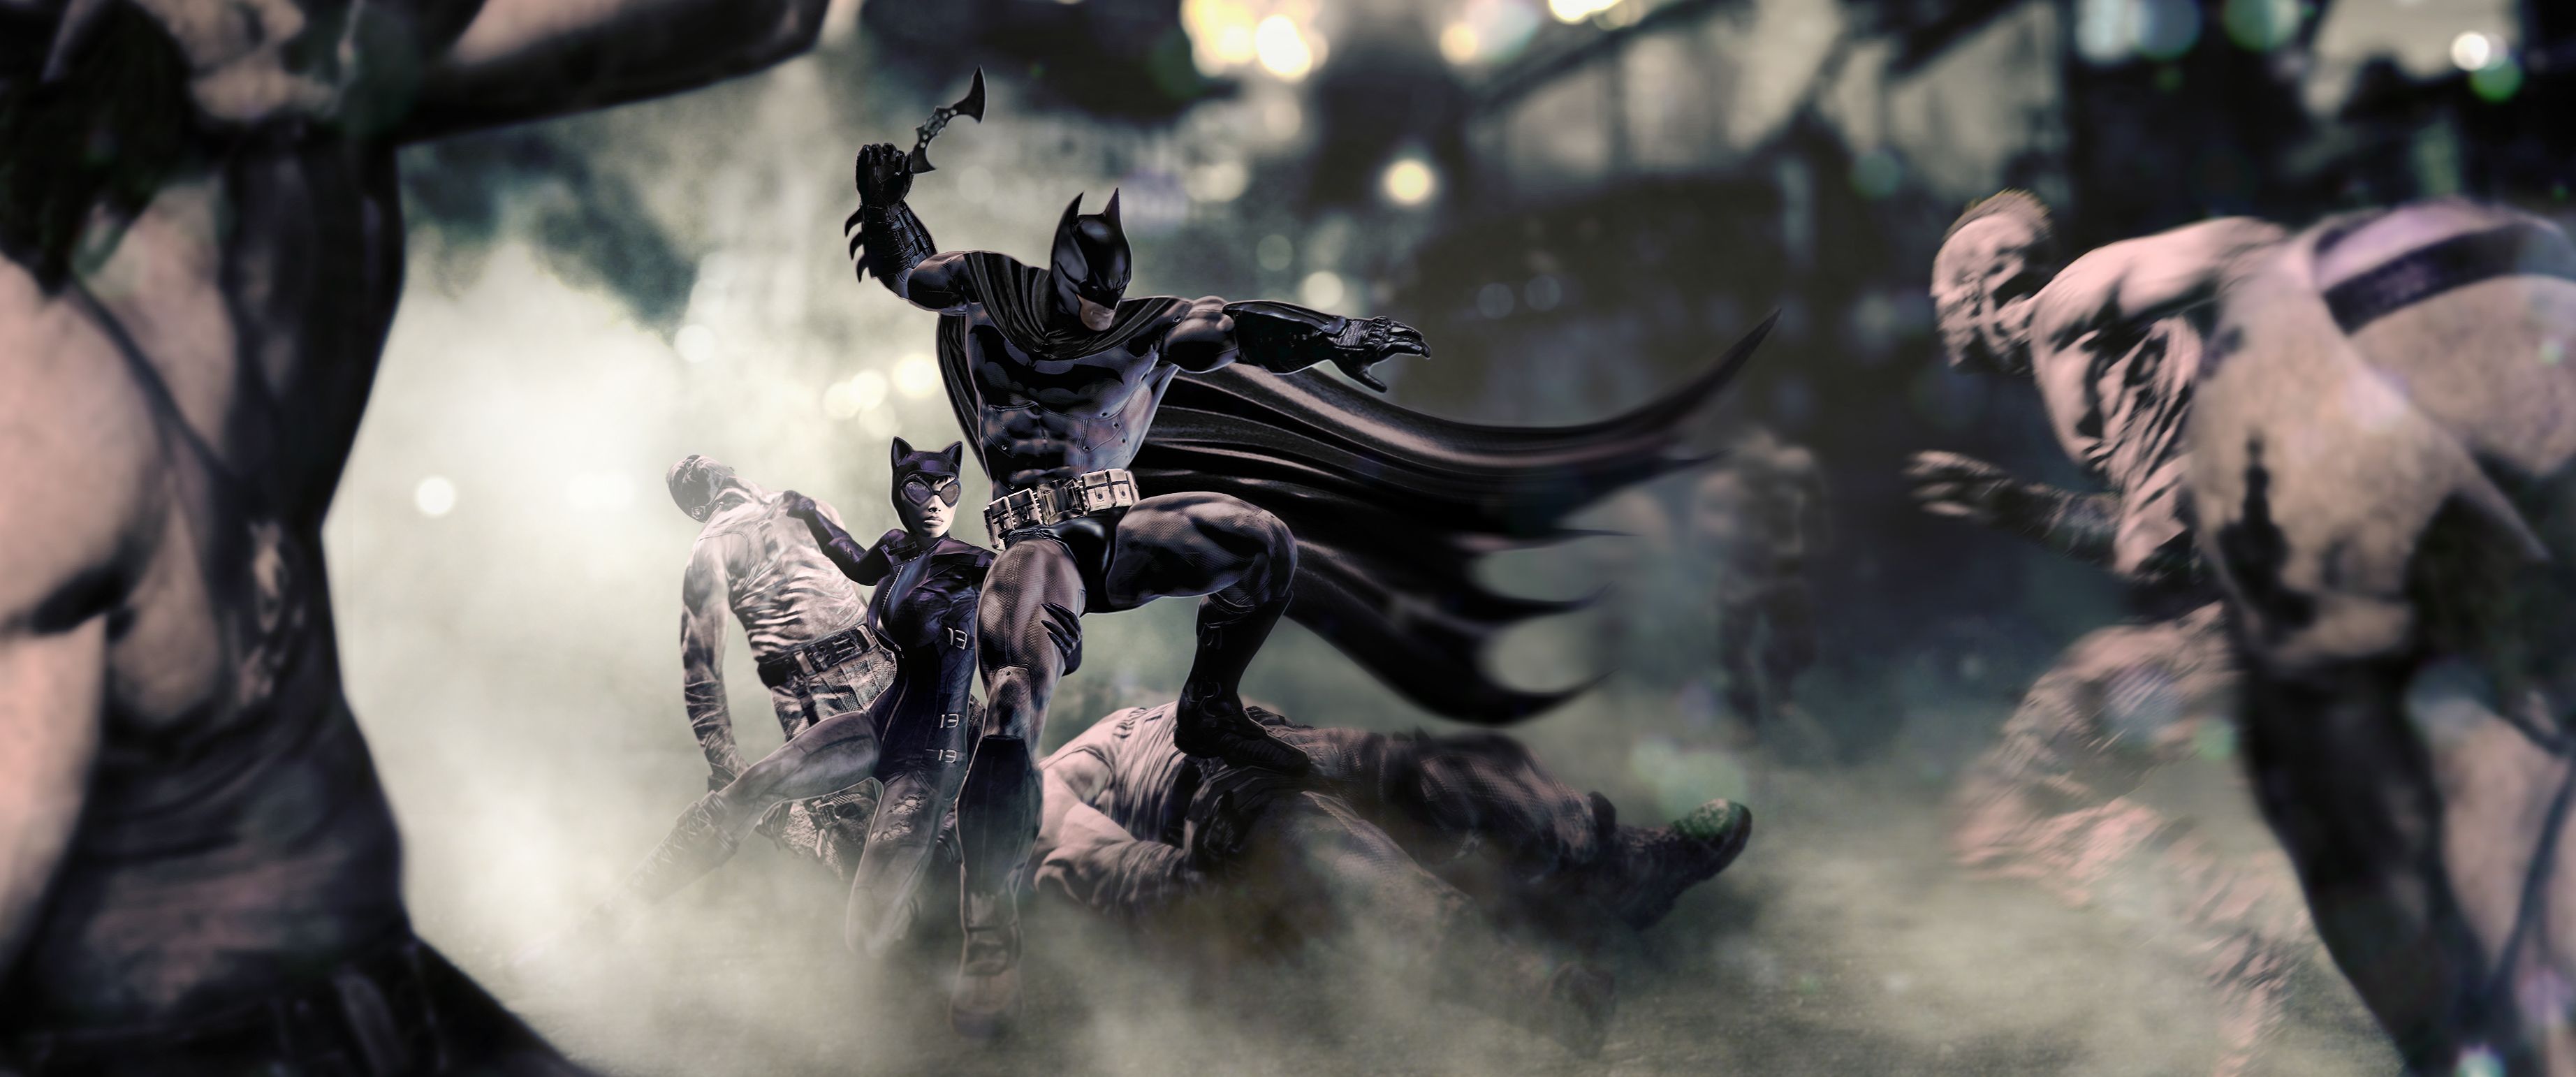 Batman Arkham City Catwoman, HD Games, 4k Wallpaper, Image